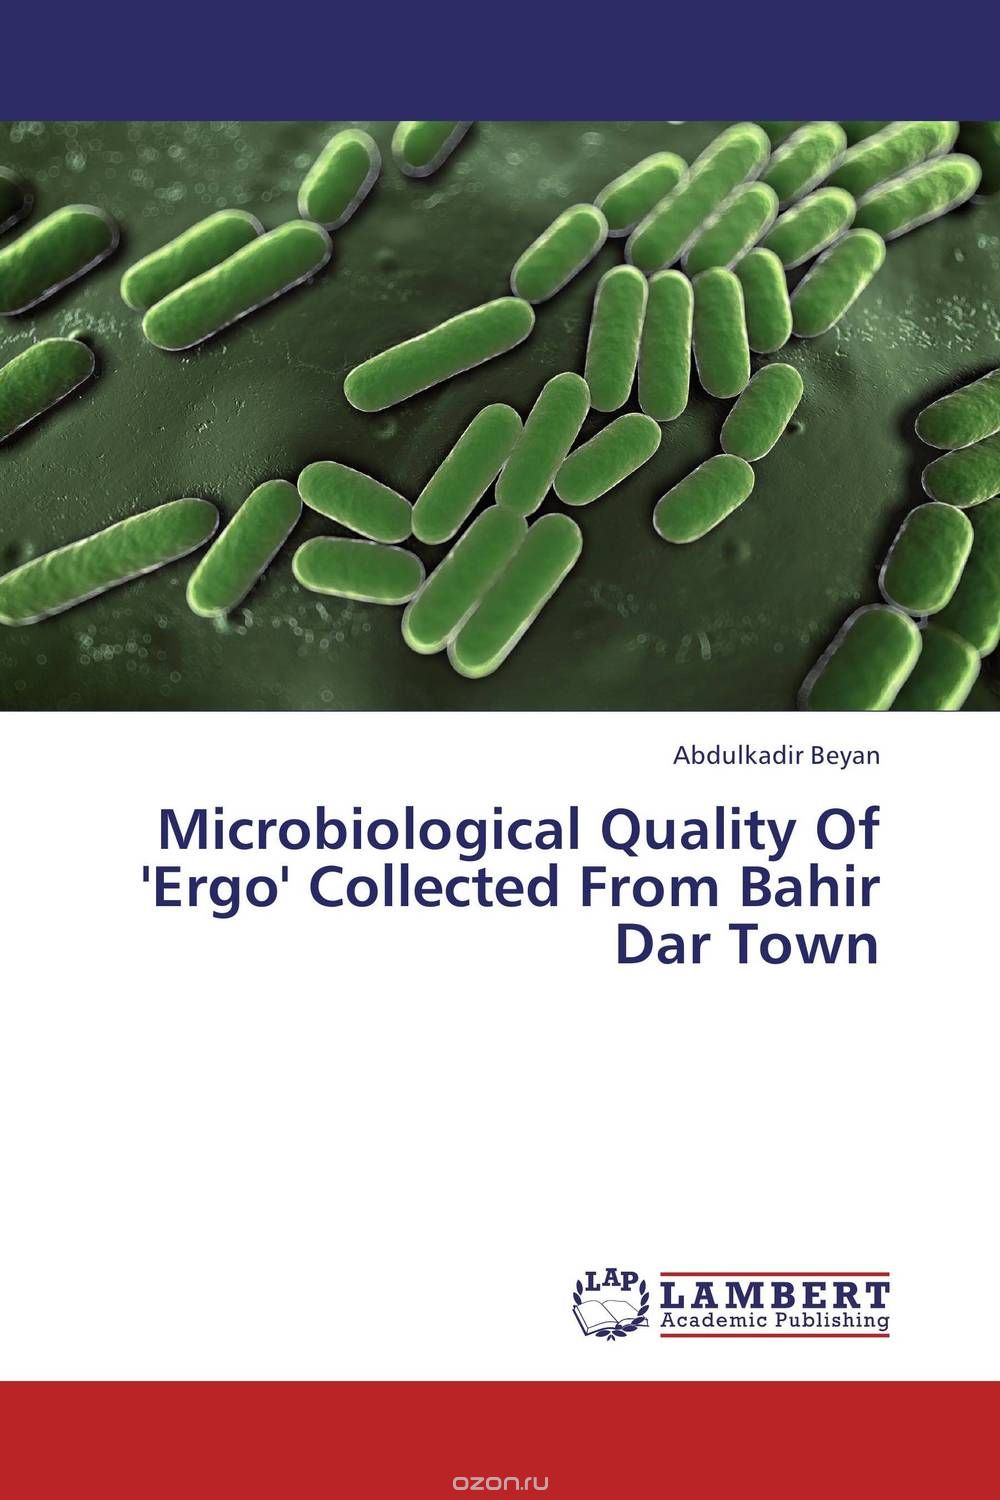 Скачать книгу "Microbiological Quality Of 'Ergo' Collected From Bahir Dar Town"